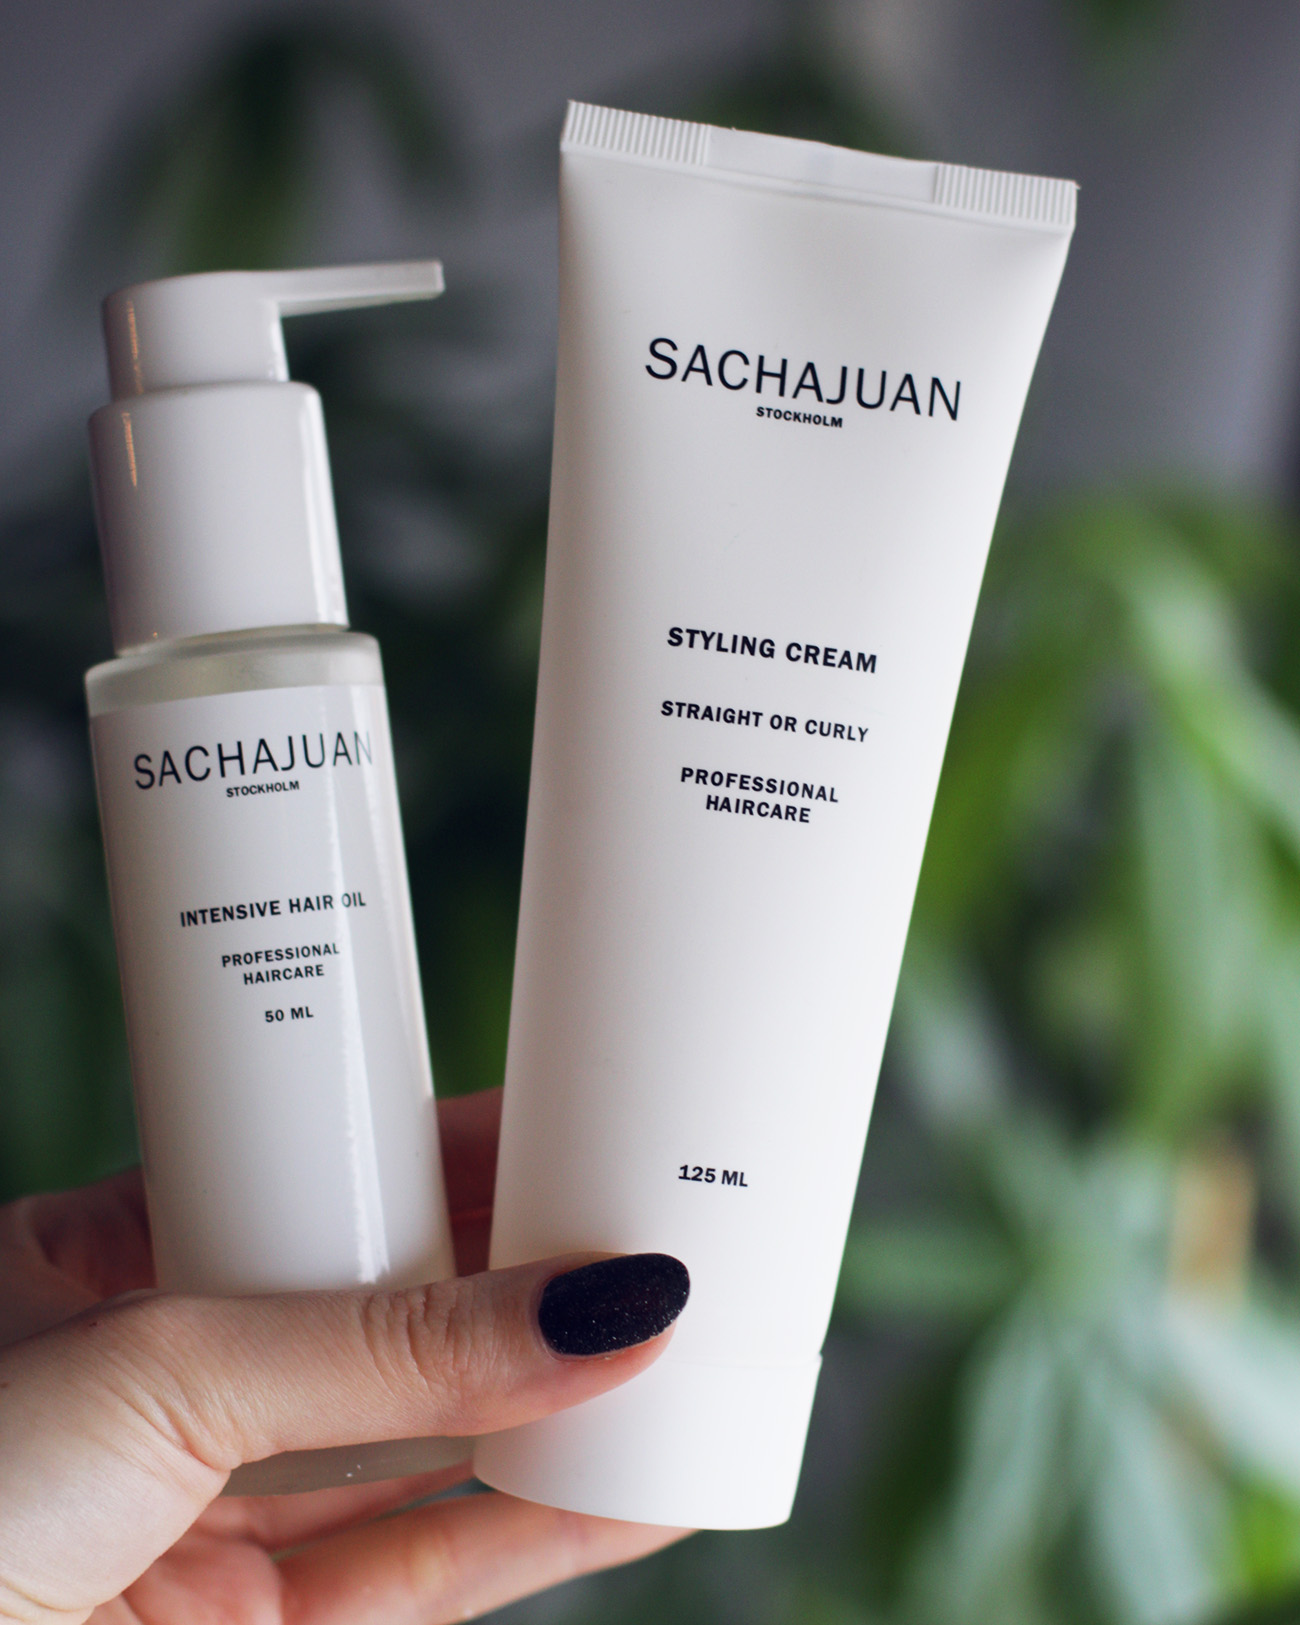 Sachajuan Intensive Hair Oil & Styling Cream